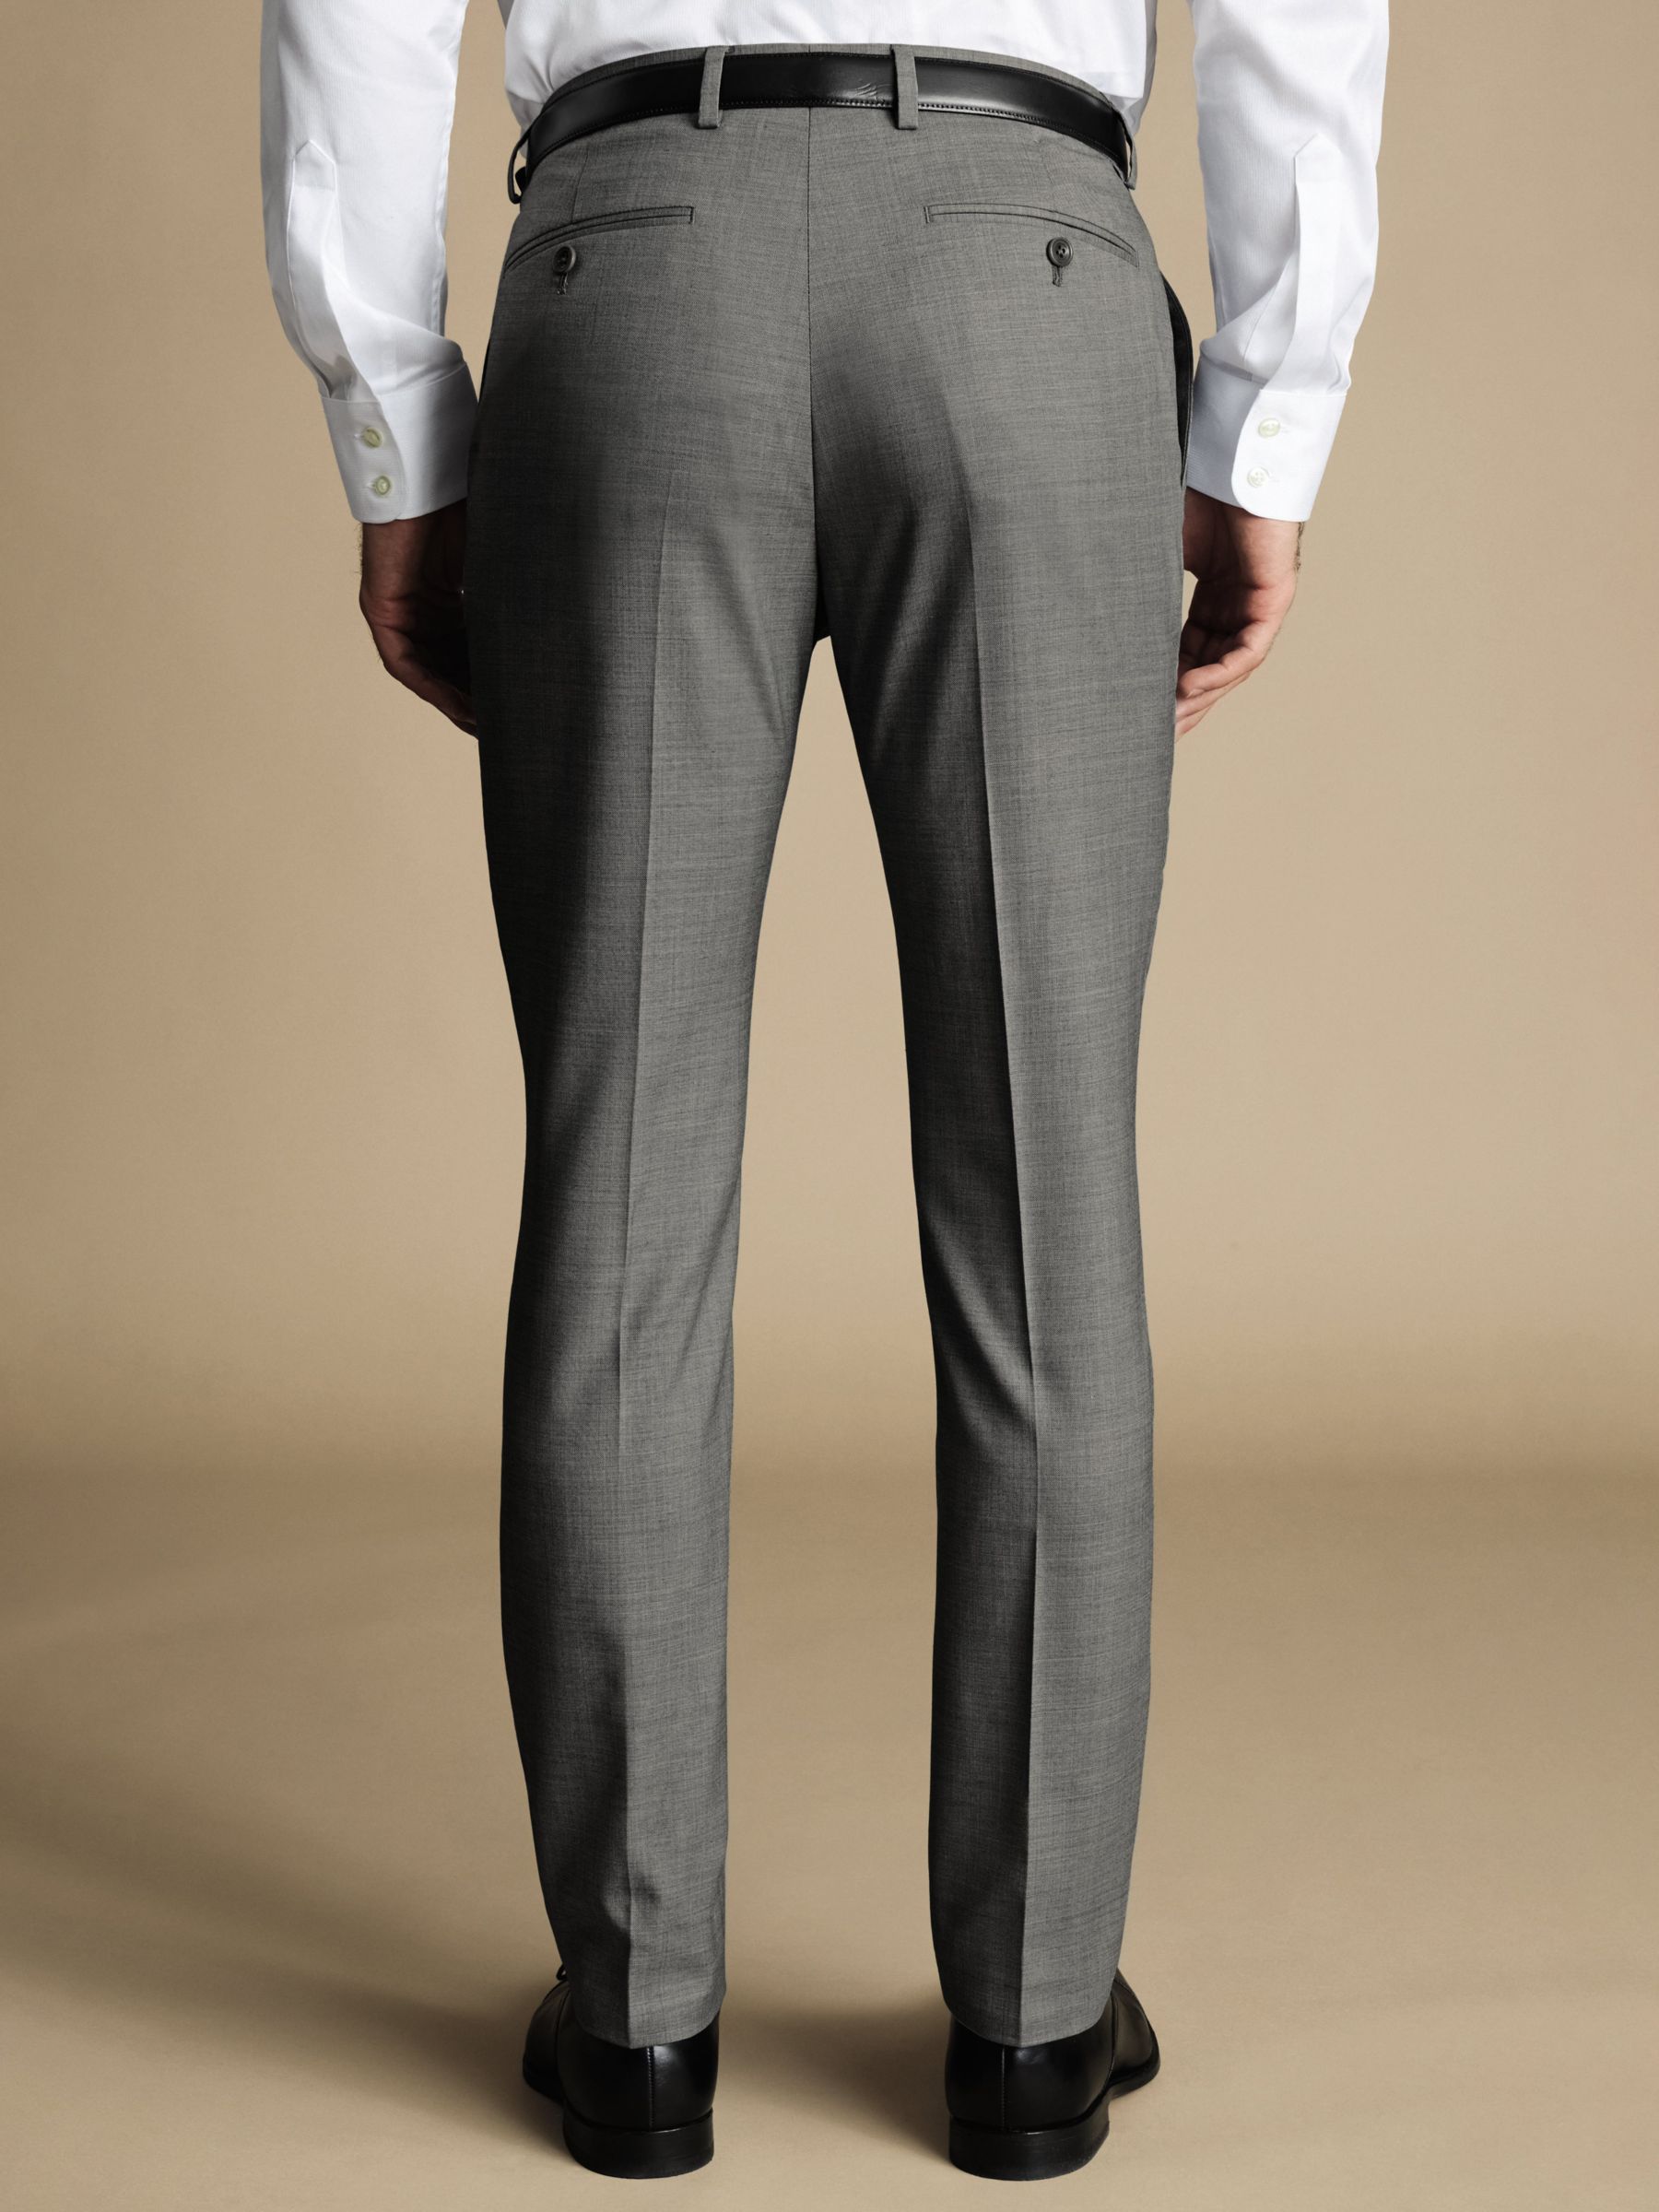 Charles Tyrwhitt Sharkskin Ultimate Performance Slim Fit Suit Trousers, Grey, W34/L30